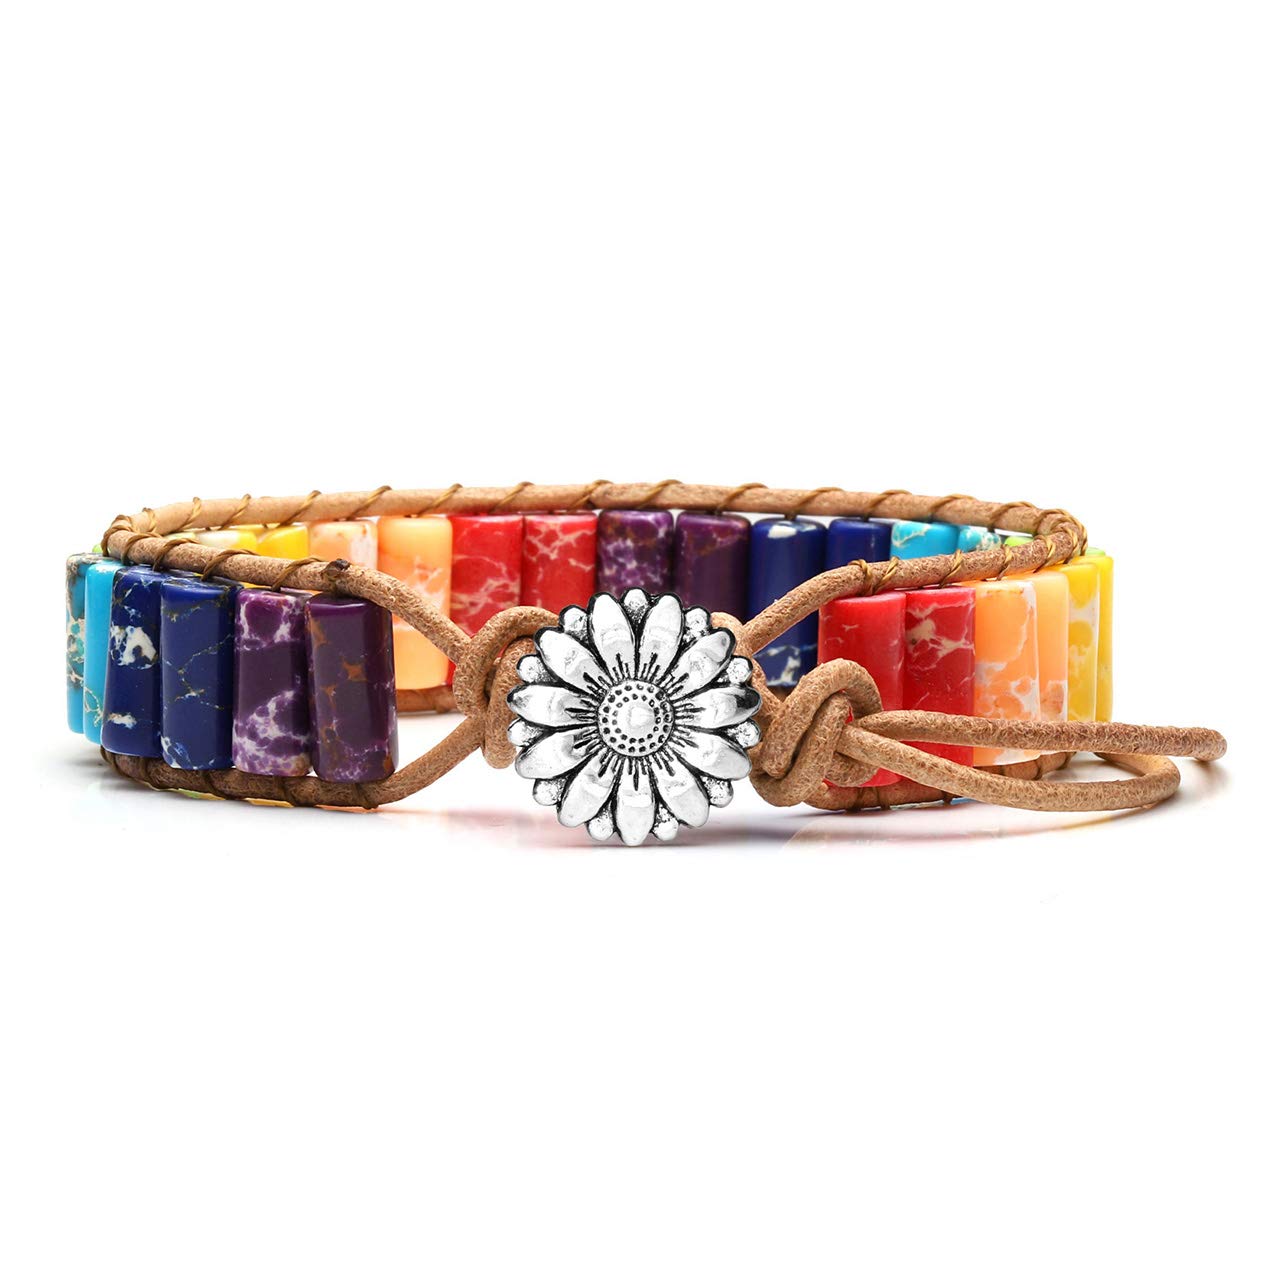 JSDDE Chakra Stone Bracelet, Healing Crystal Imperial Jasper Gemstone Weave Adjustable Boho Bracelets